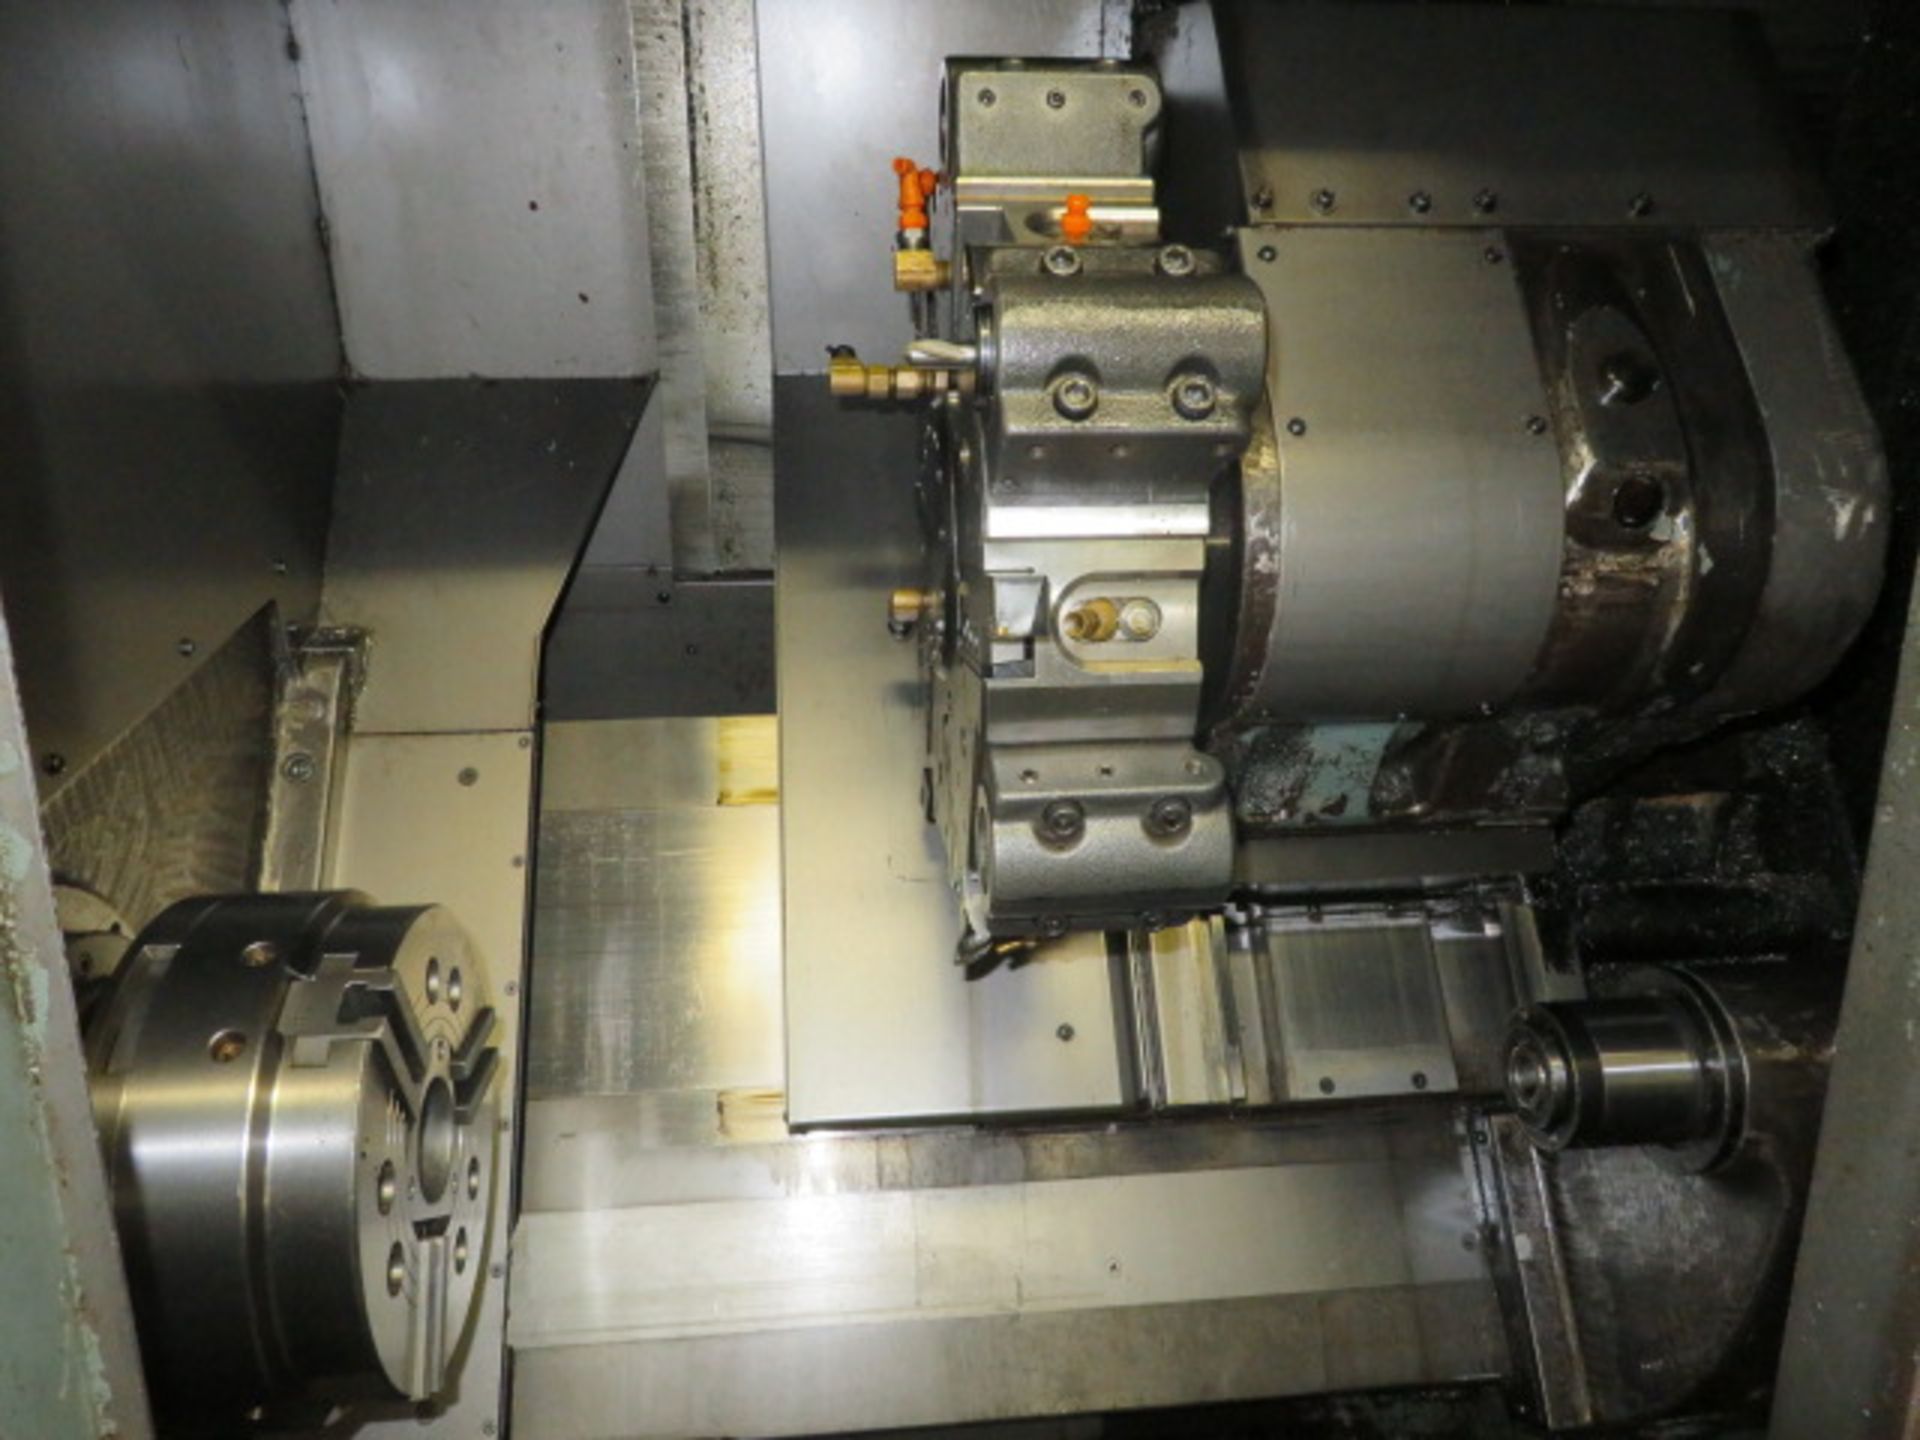 MORI-SEIKI SL3 CNC LATHE, S/N 3320,YASNAC CNC CONTROL, 15.7 IN SWING, 21.65 IN MAX TURNING LENGTH, - Image 2 of 4